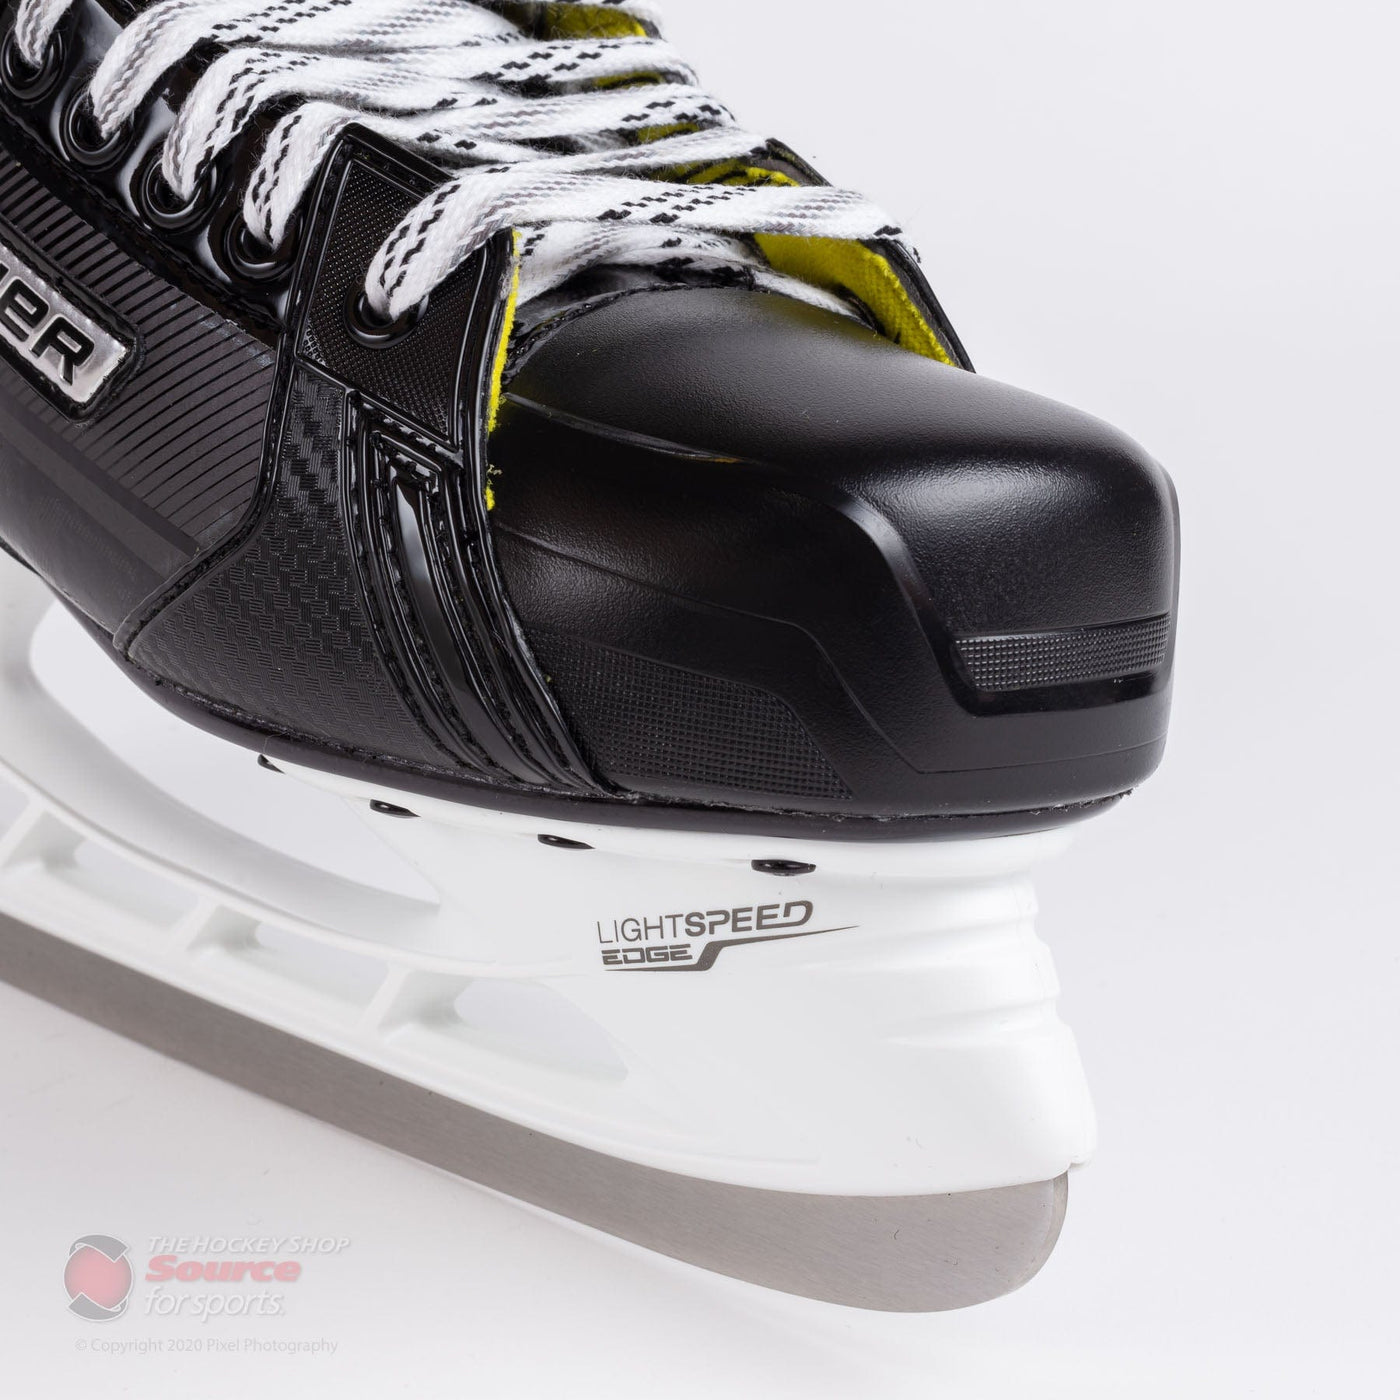 Bauer Supreme Comp Senior Hockey Skates (2020)